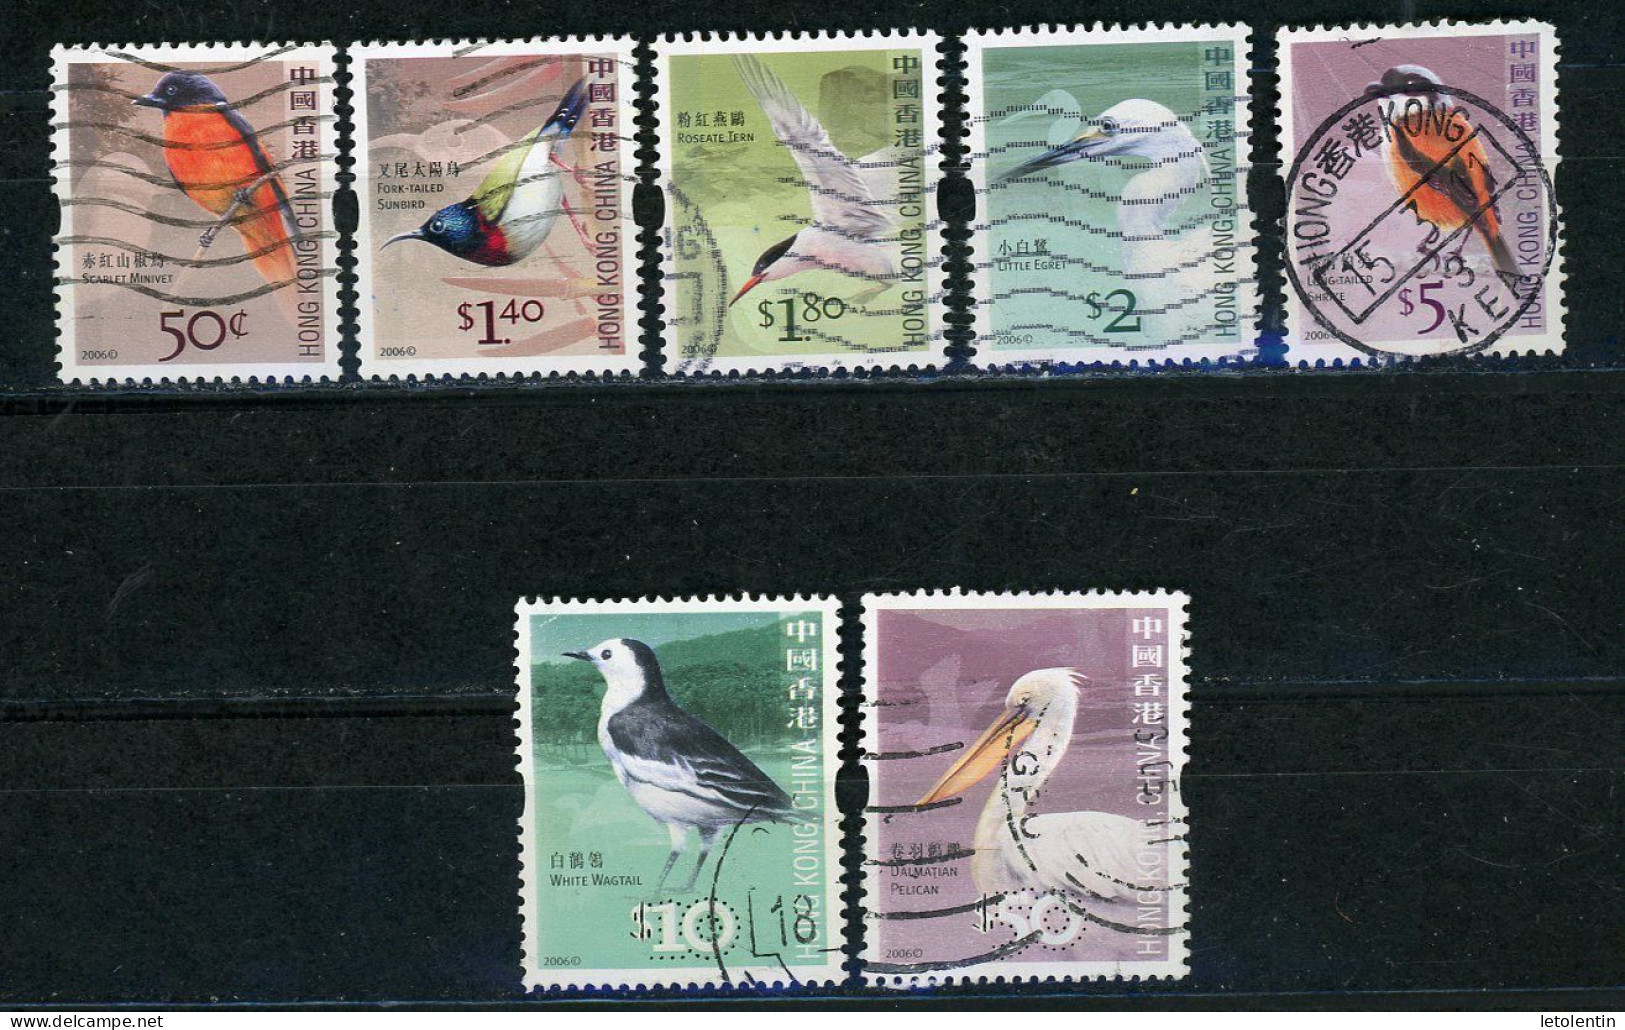 HONG KONG - OISEAUX N° Yt 1303+1305+1306+1308+1312+1313+1314 Obli. - Used Stamps